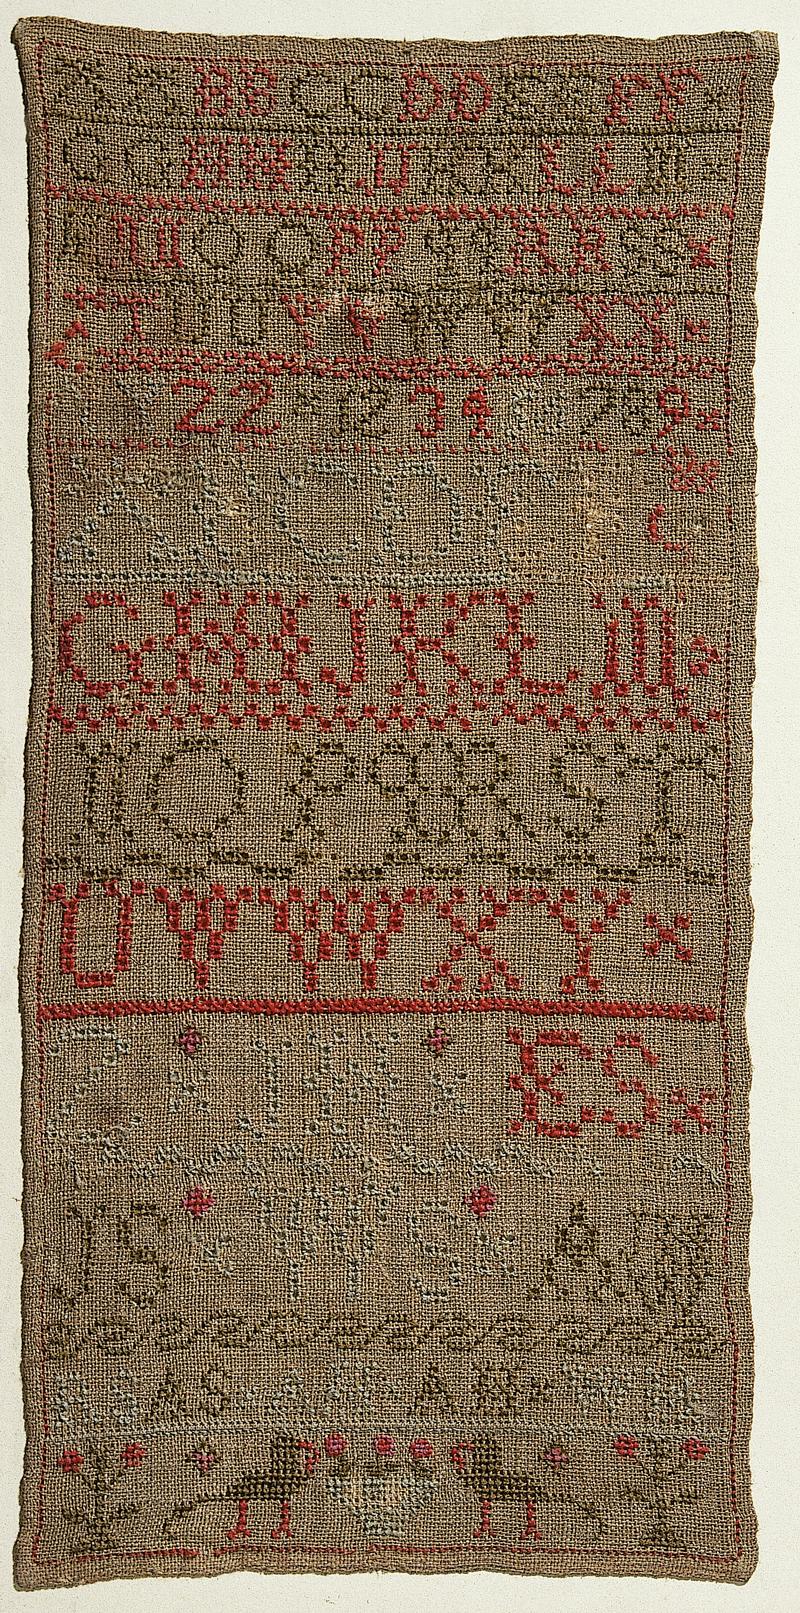 Sampler (alphabet &amp; motifs), made in England, c. 1840